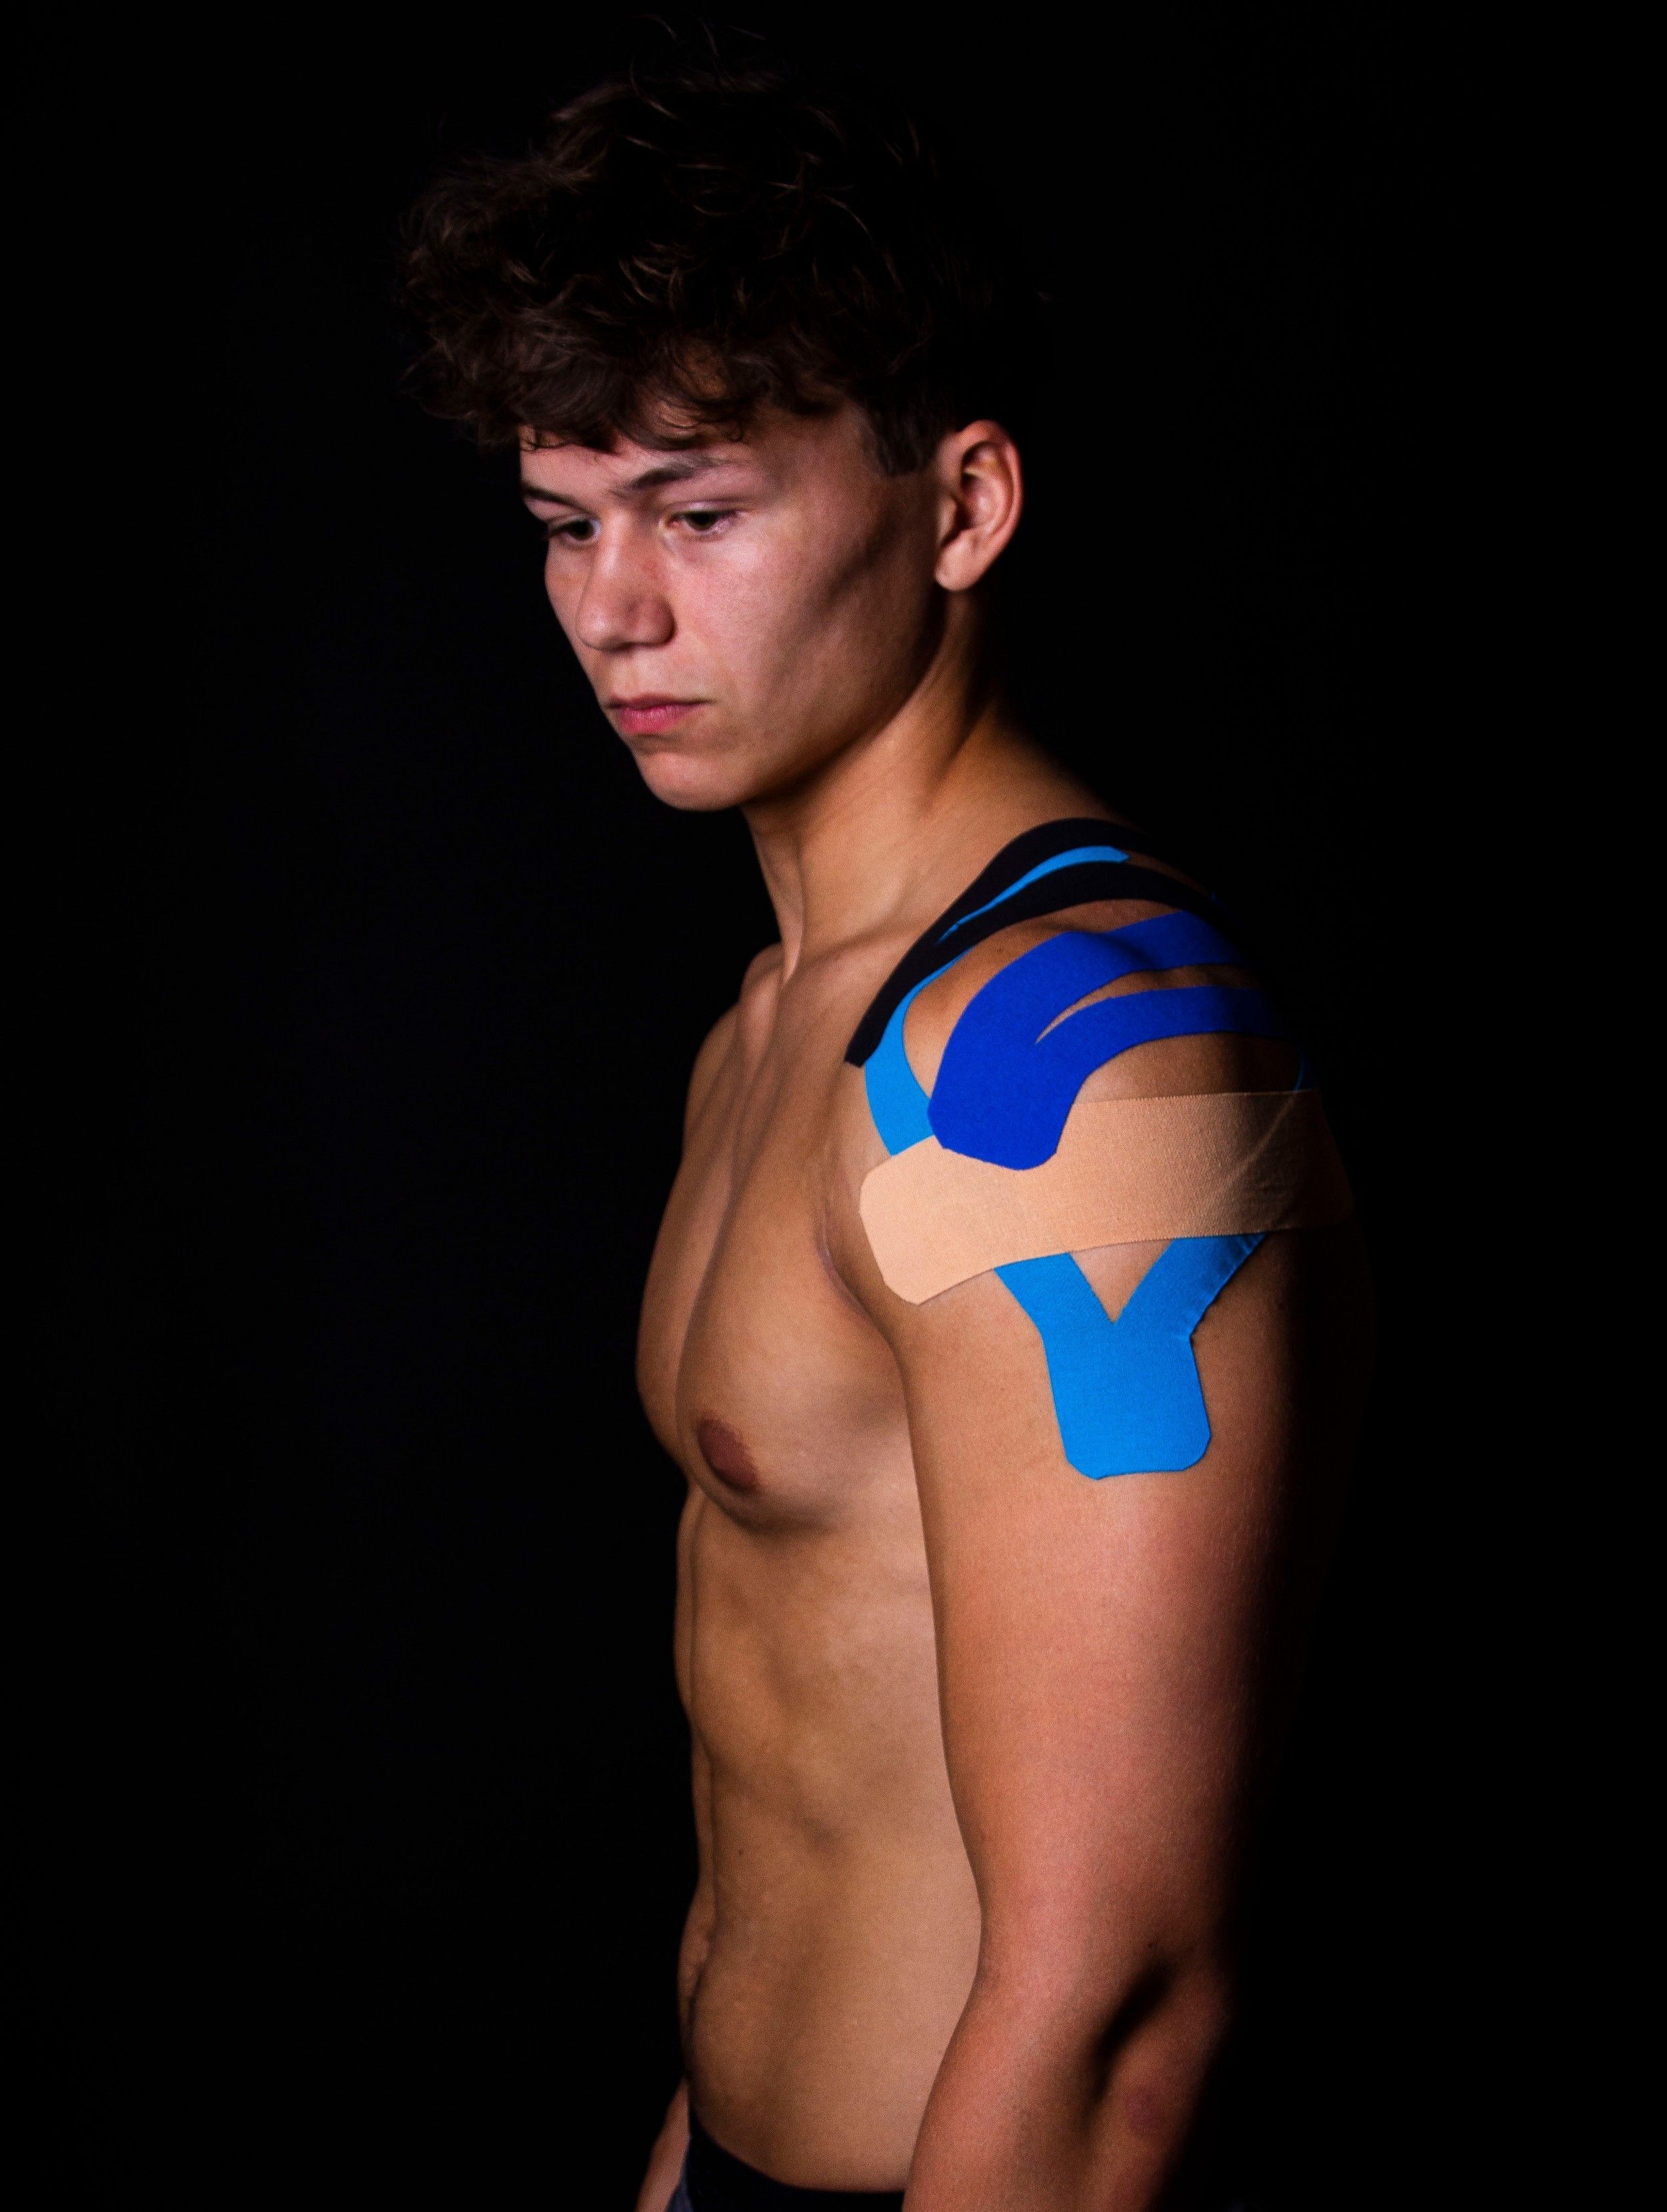 gladiator sports kinesiology strips worn on arm